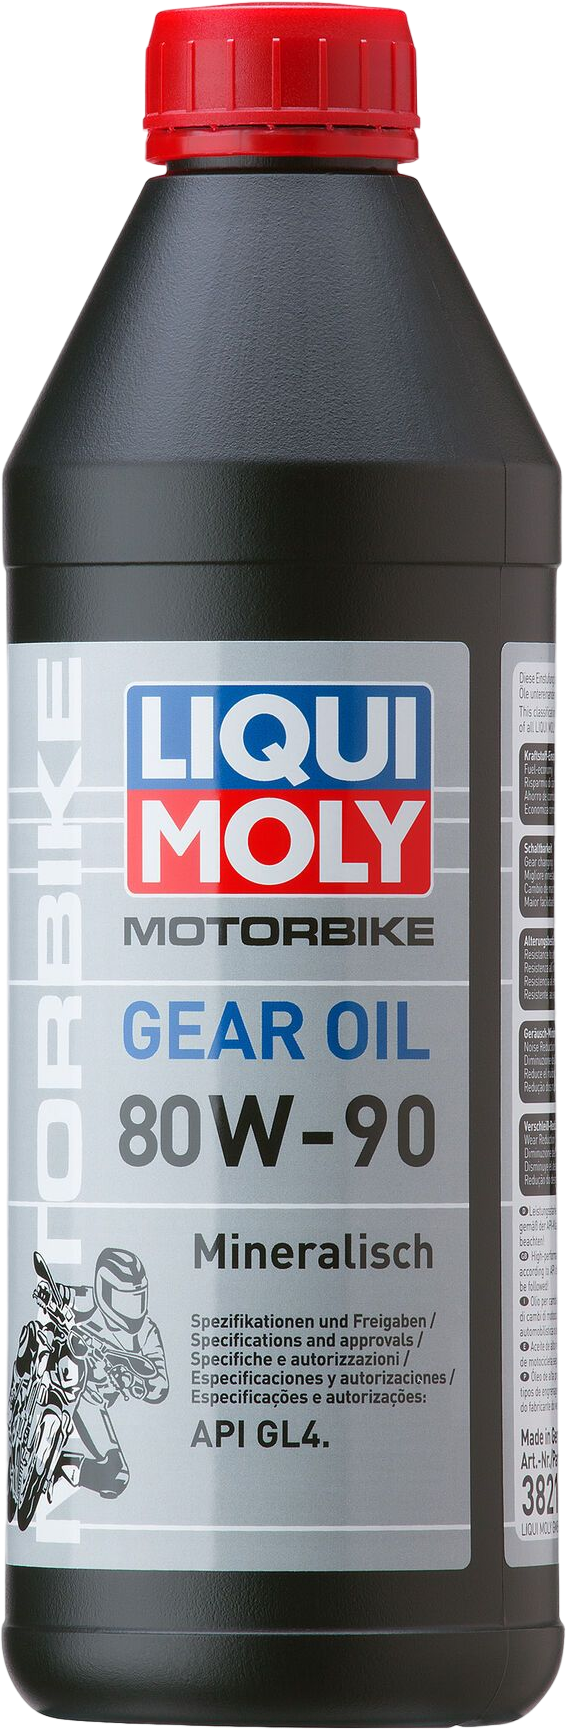 Liqui Moly Motorbike Gear Oil 80W-90, 1 lt